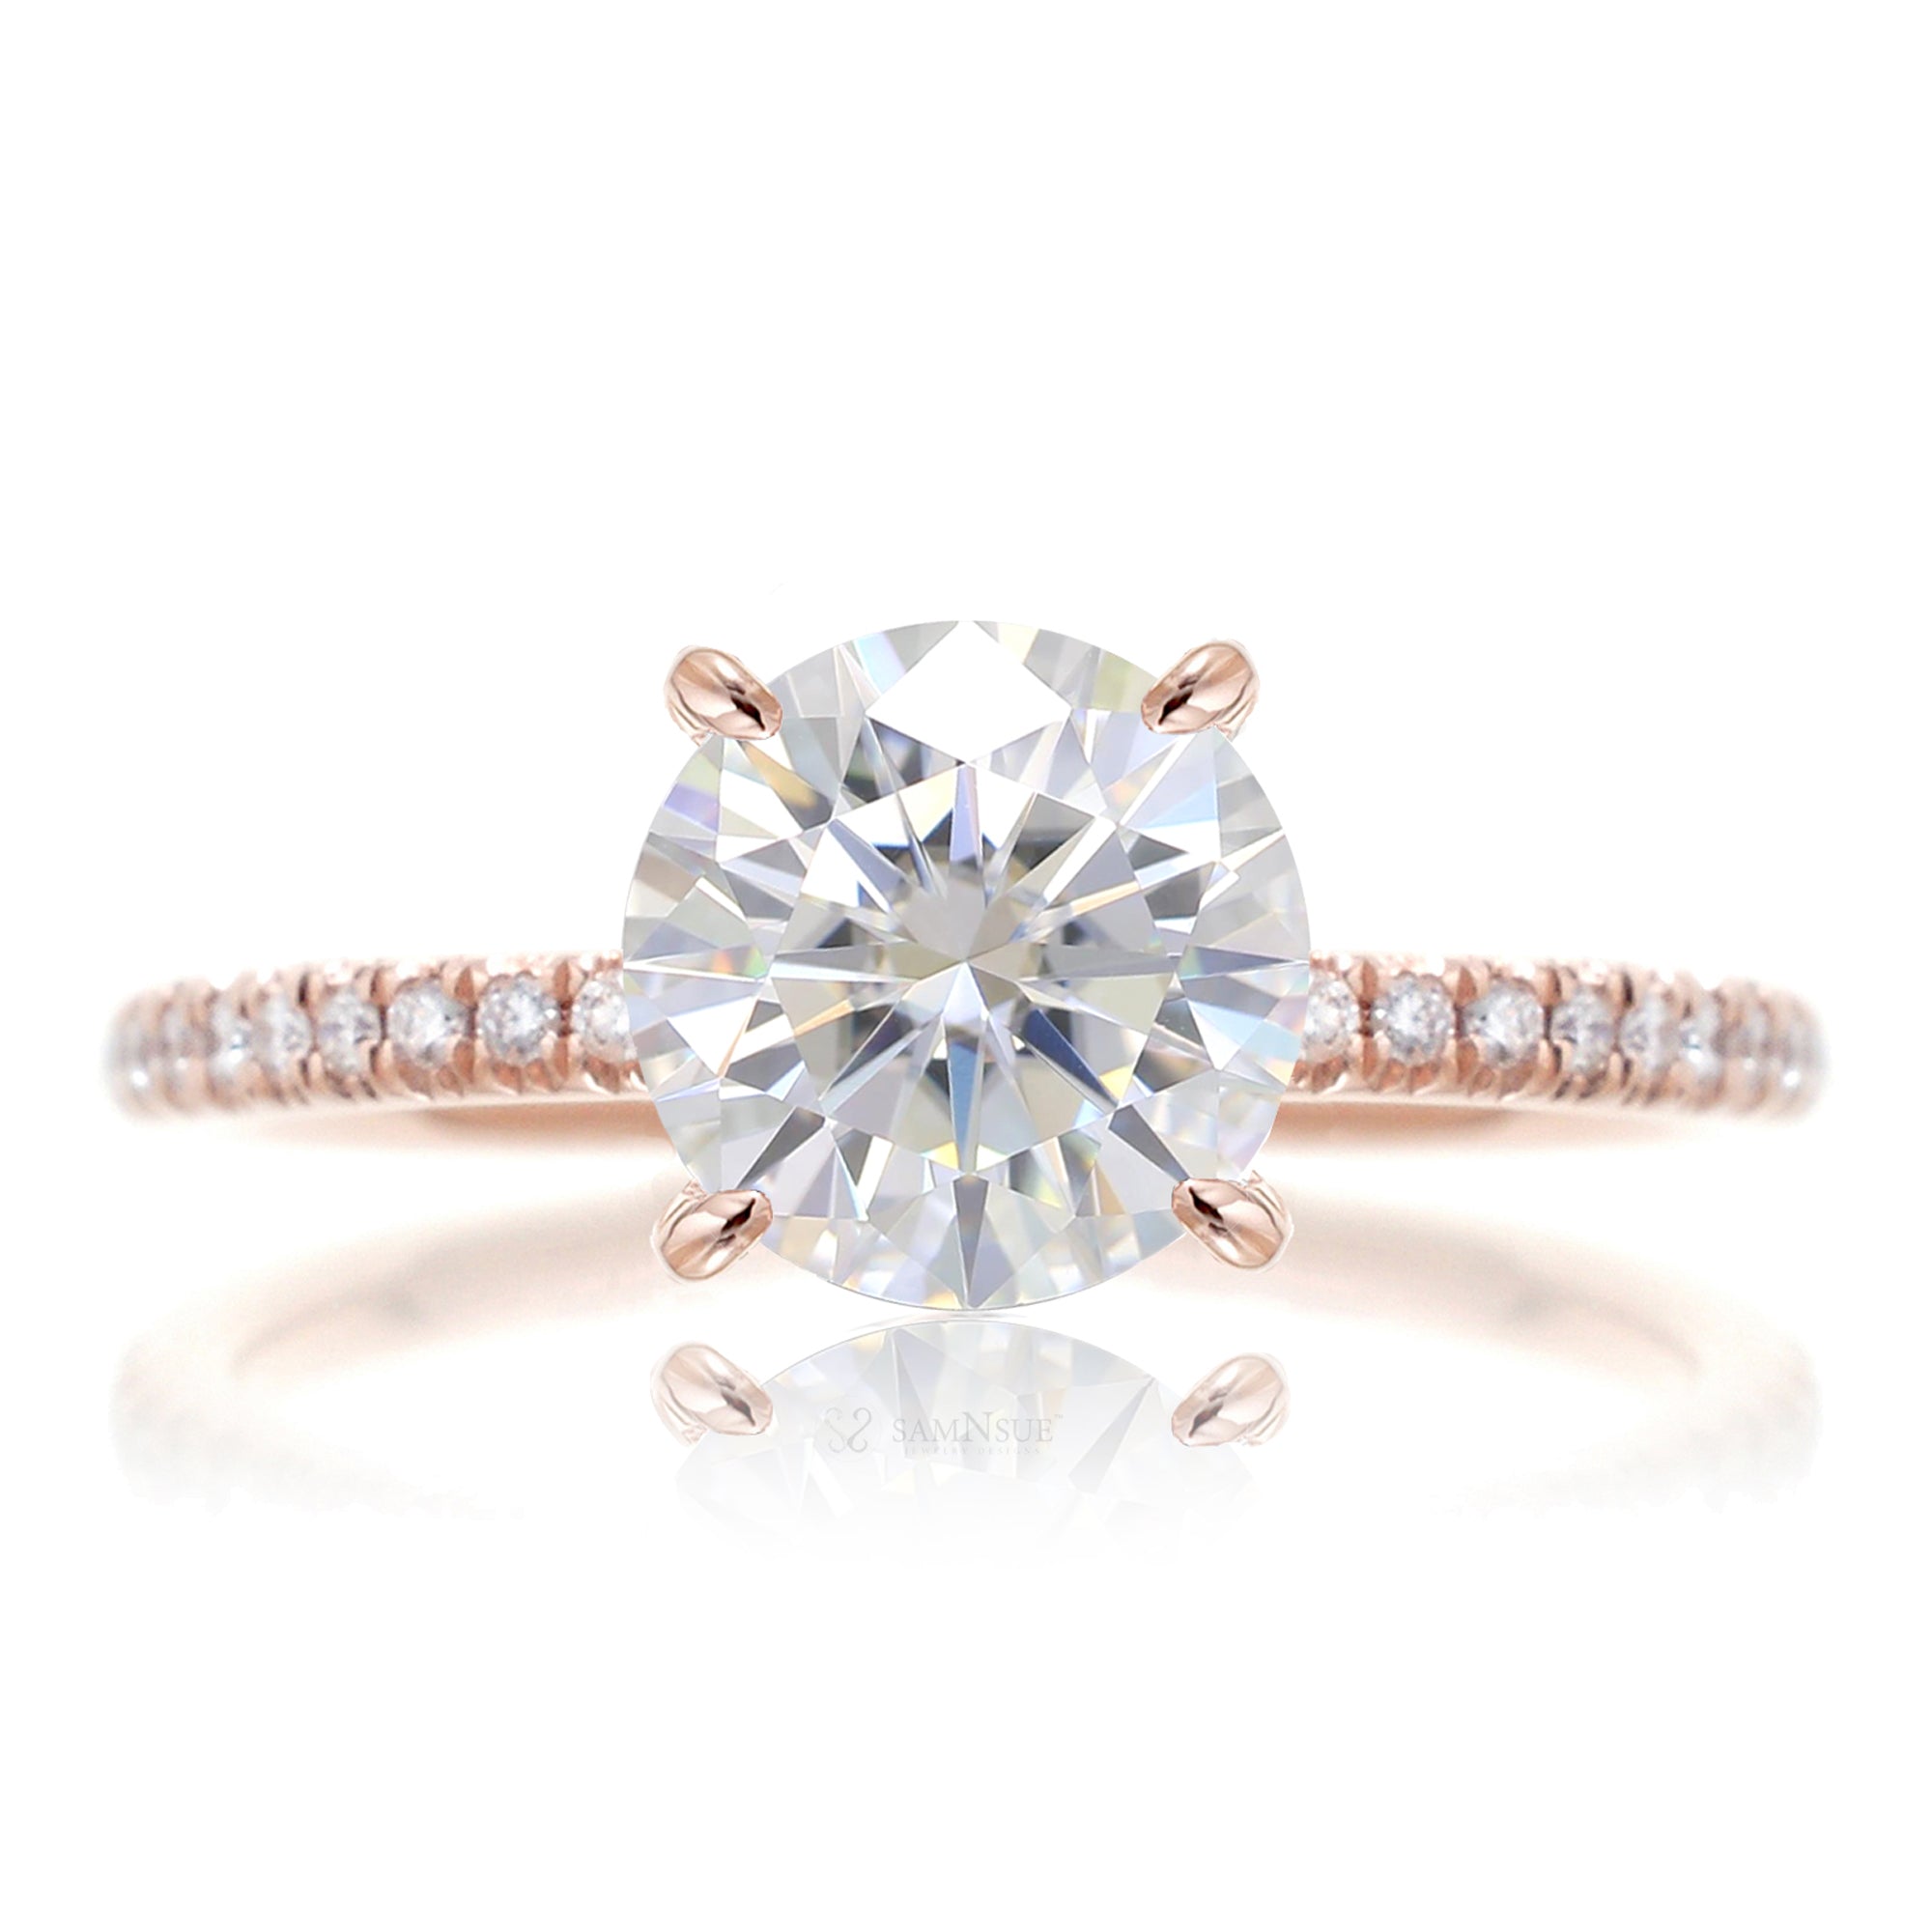 Round brilliant cut moissanite diamond band engagement ring rose gold - The Ava